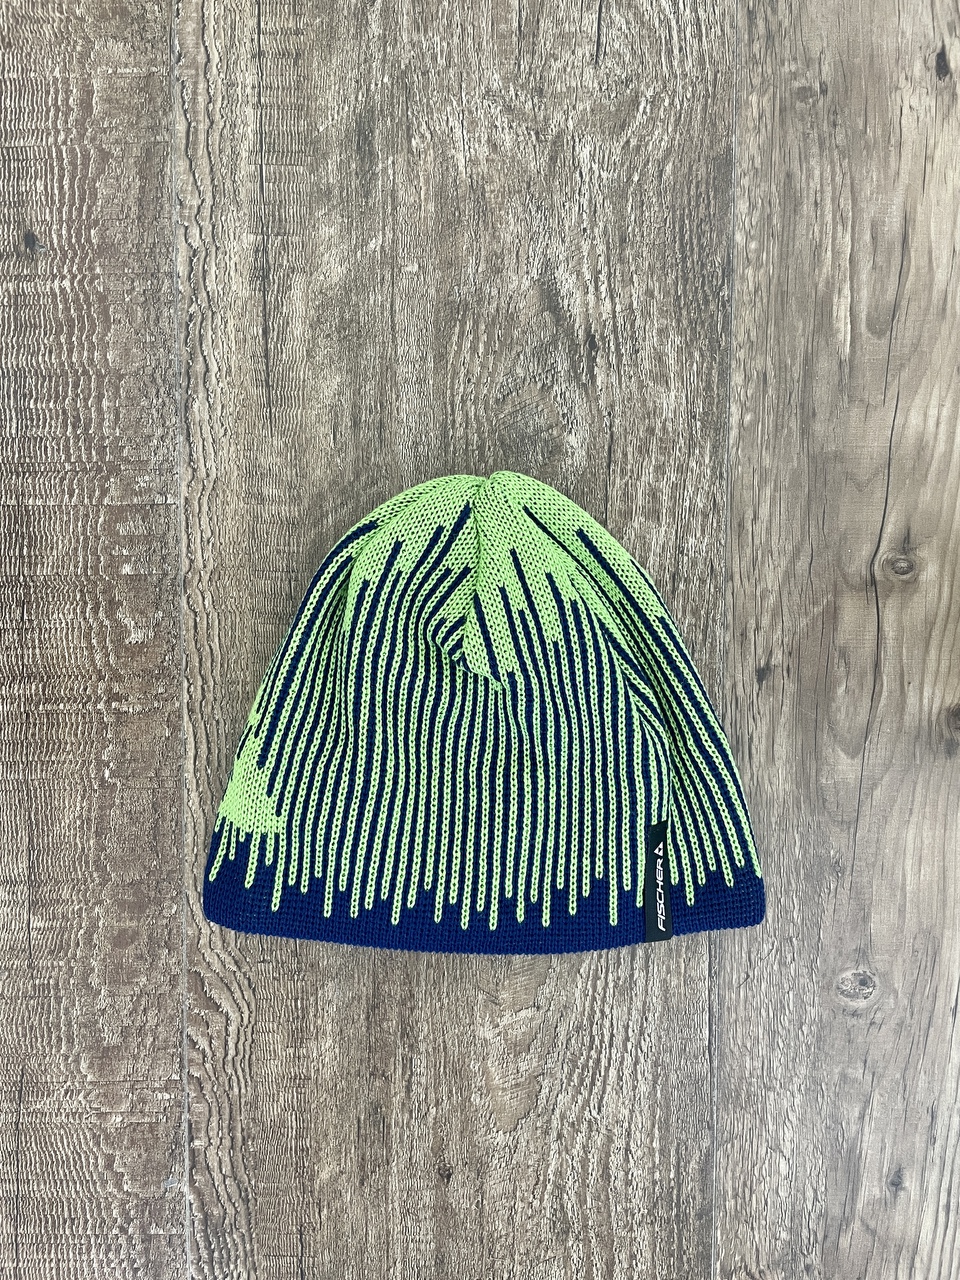 Fischer Hat - Bromont - royal blue/green